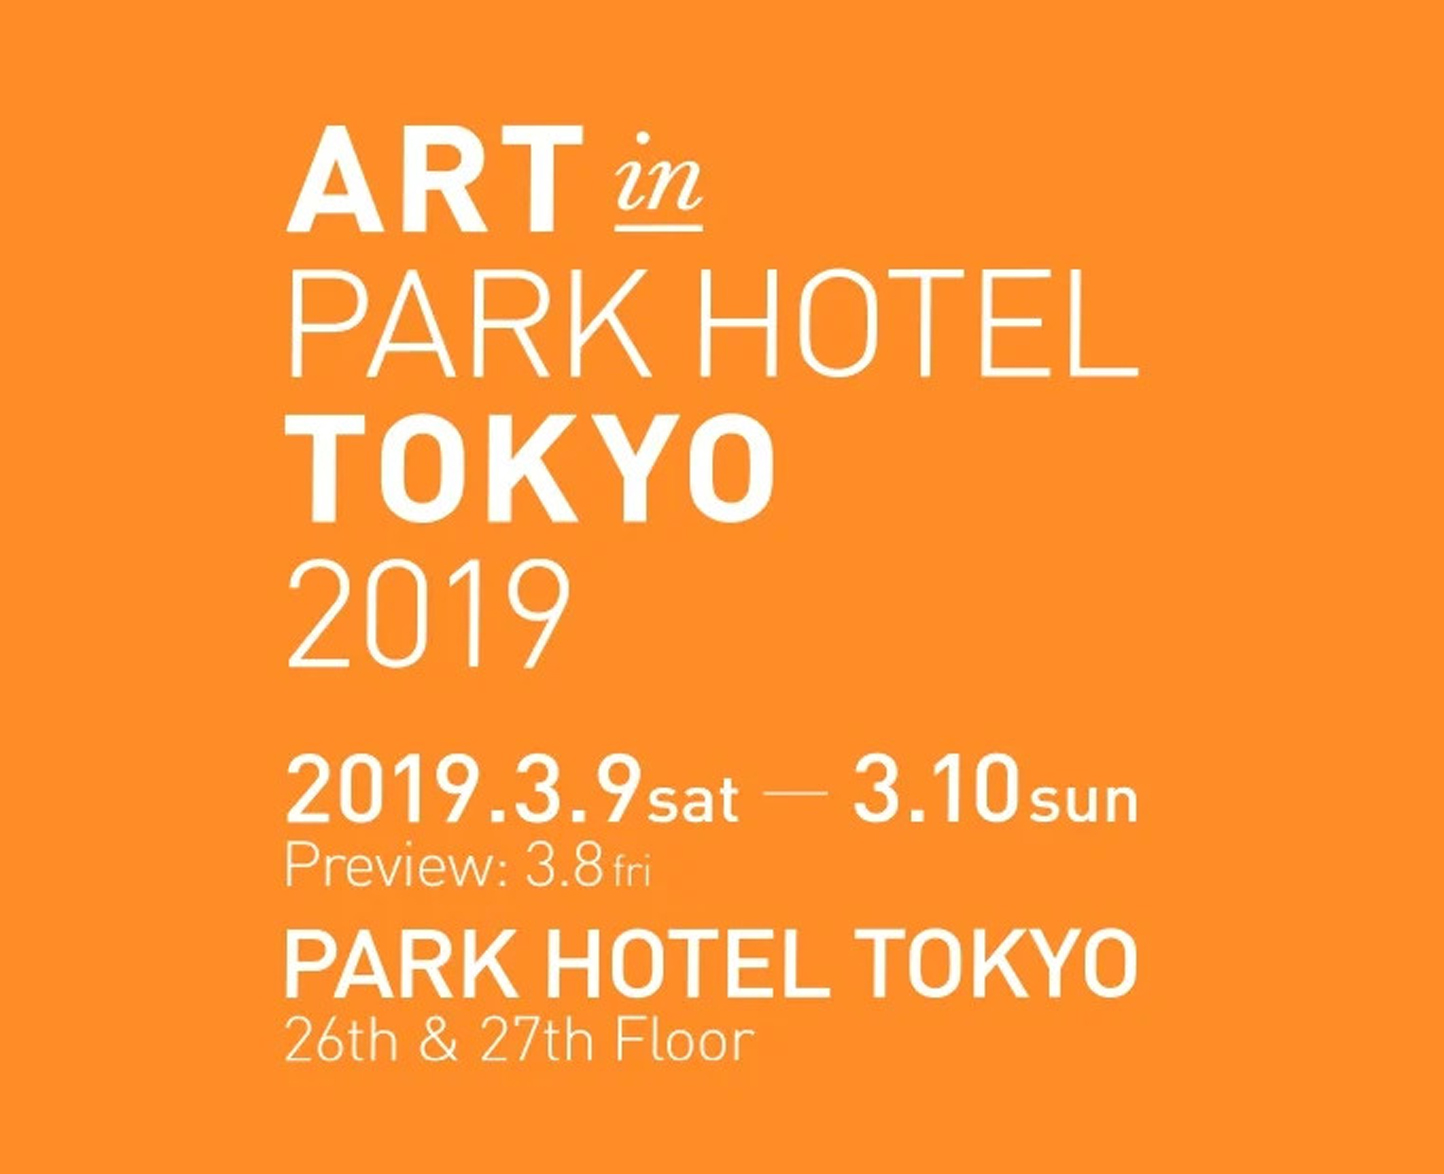 ART in PARK HOTEL TOKYO 2019